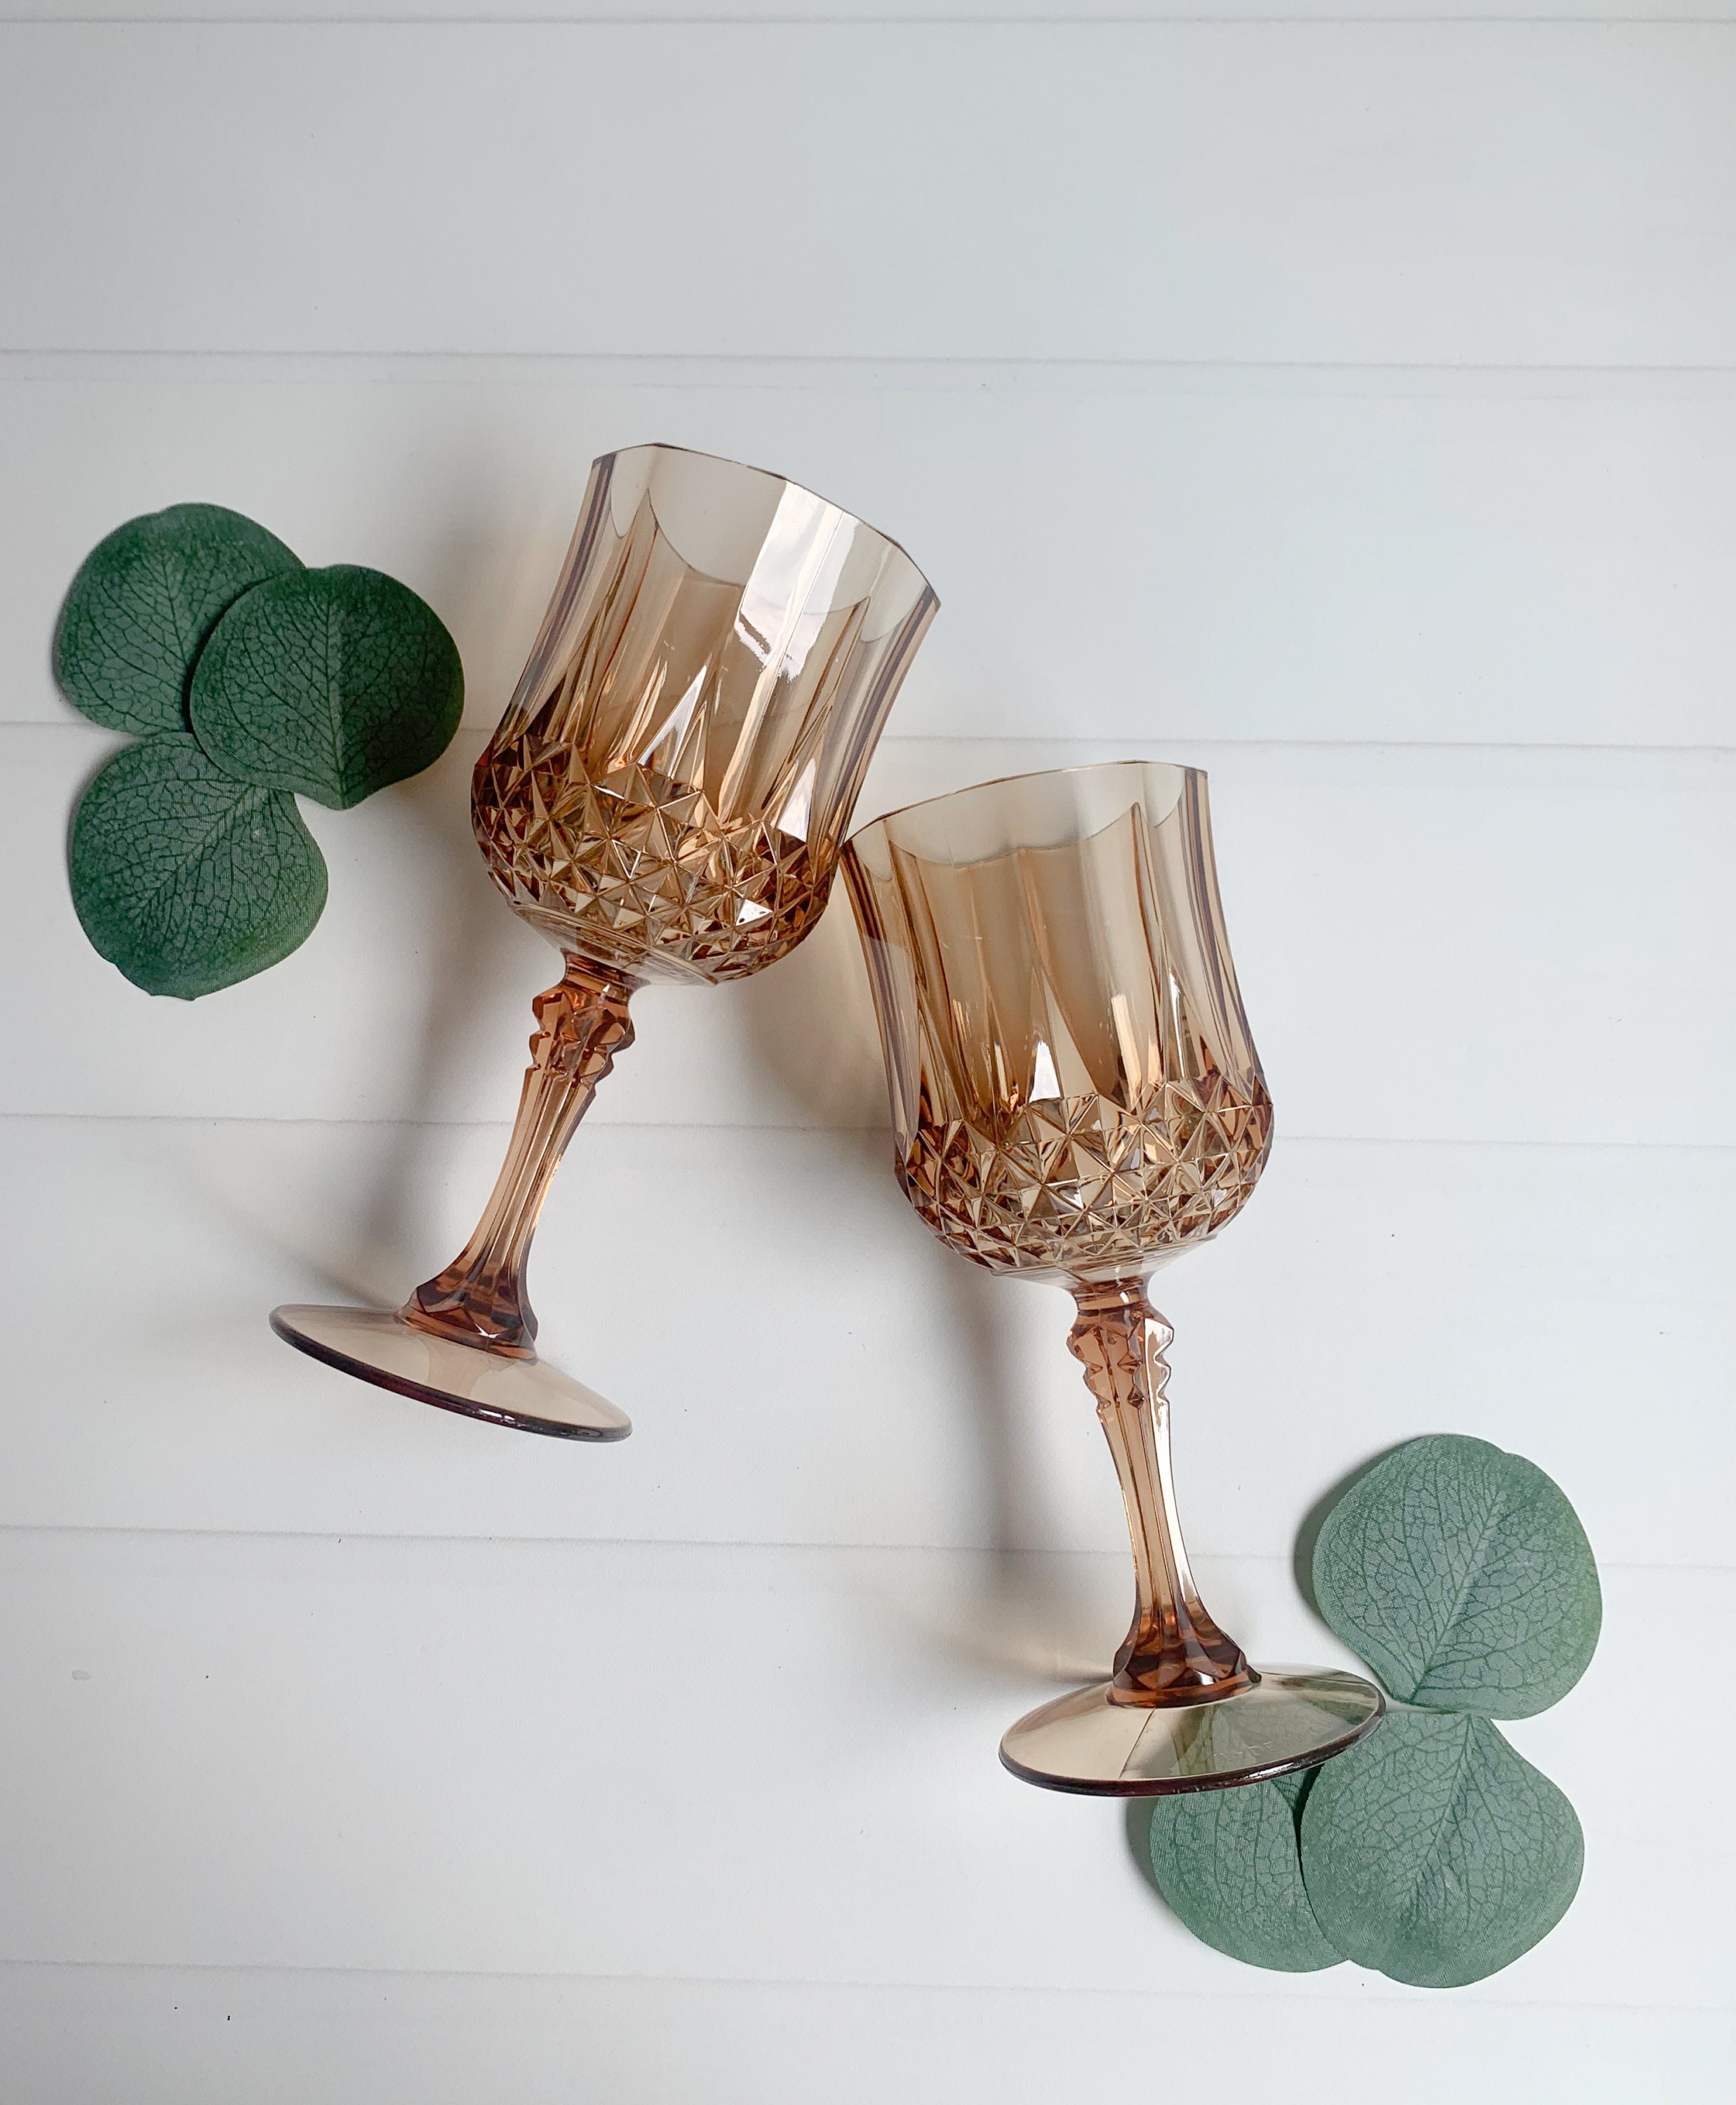 Acrylic Wine Glass - U Shape with Bamboo Stem 16 oz. Set of 4